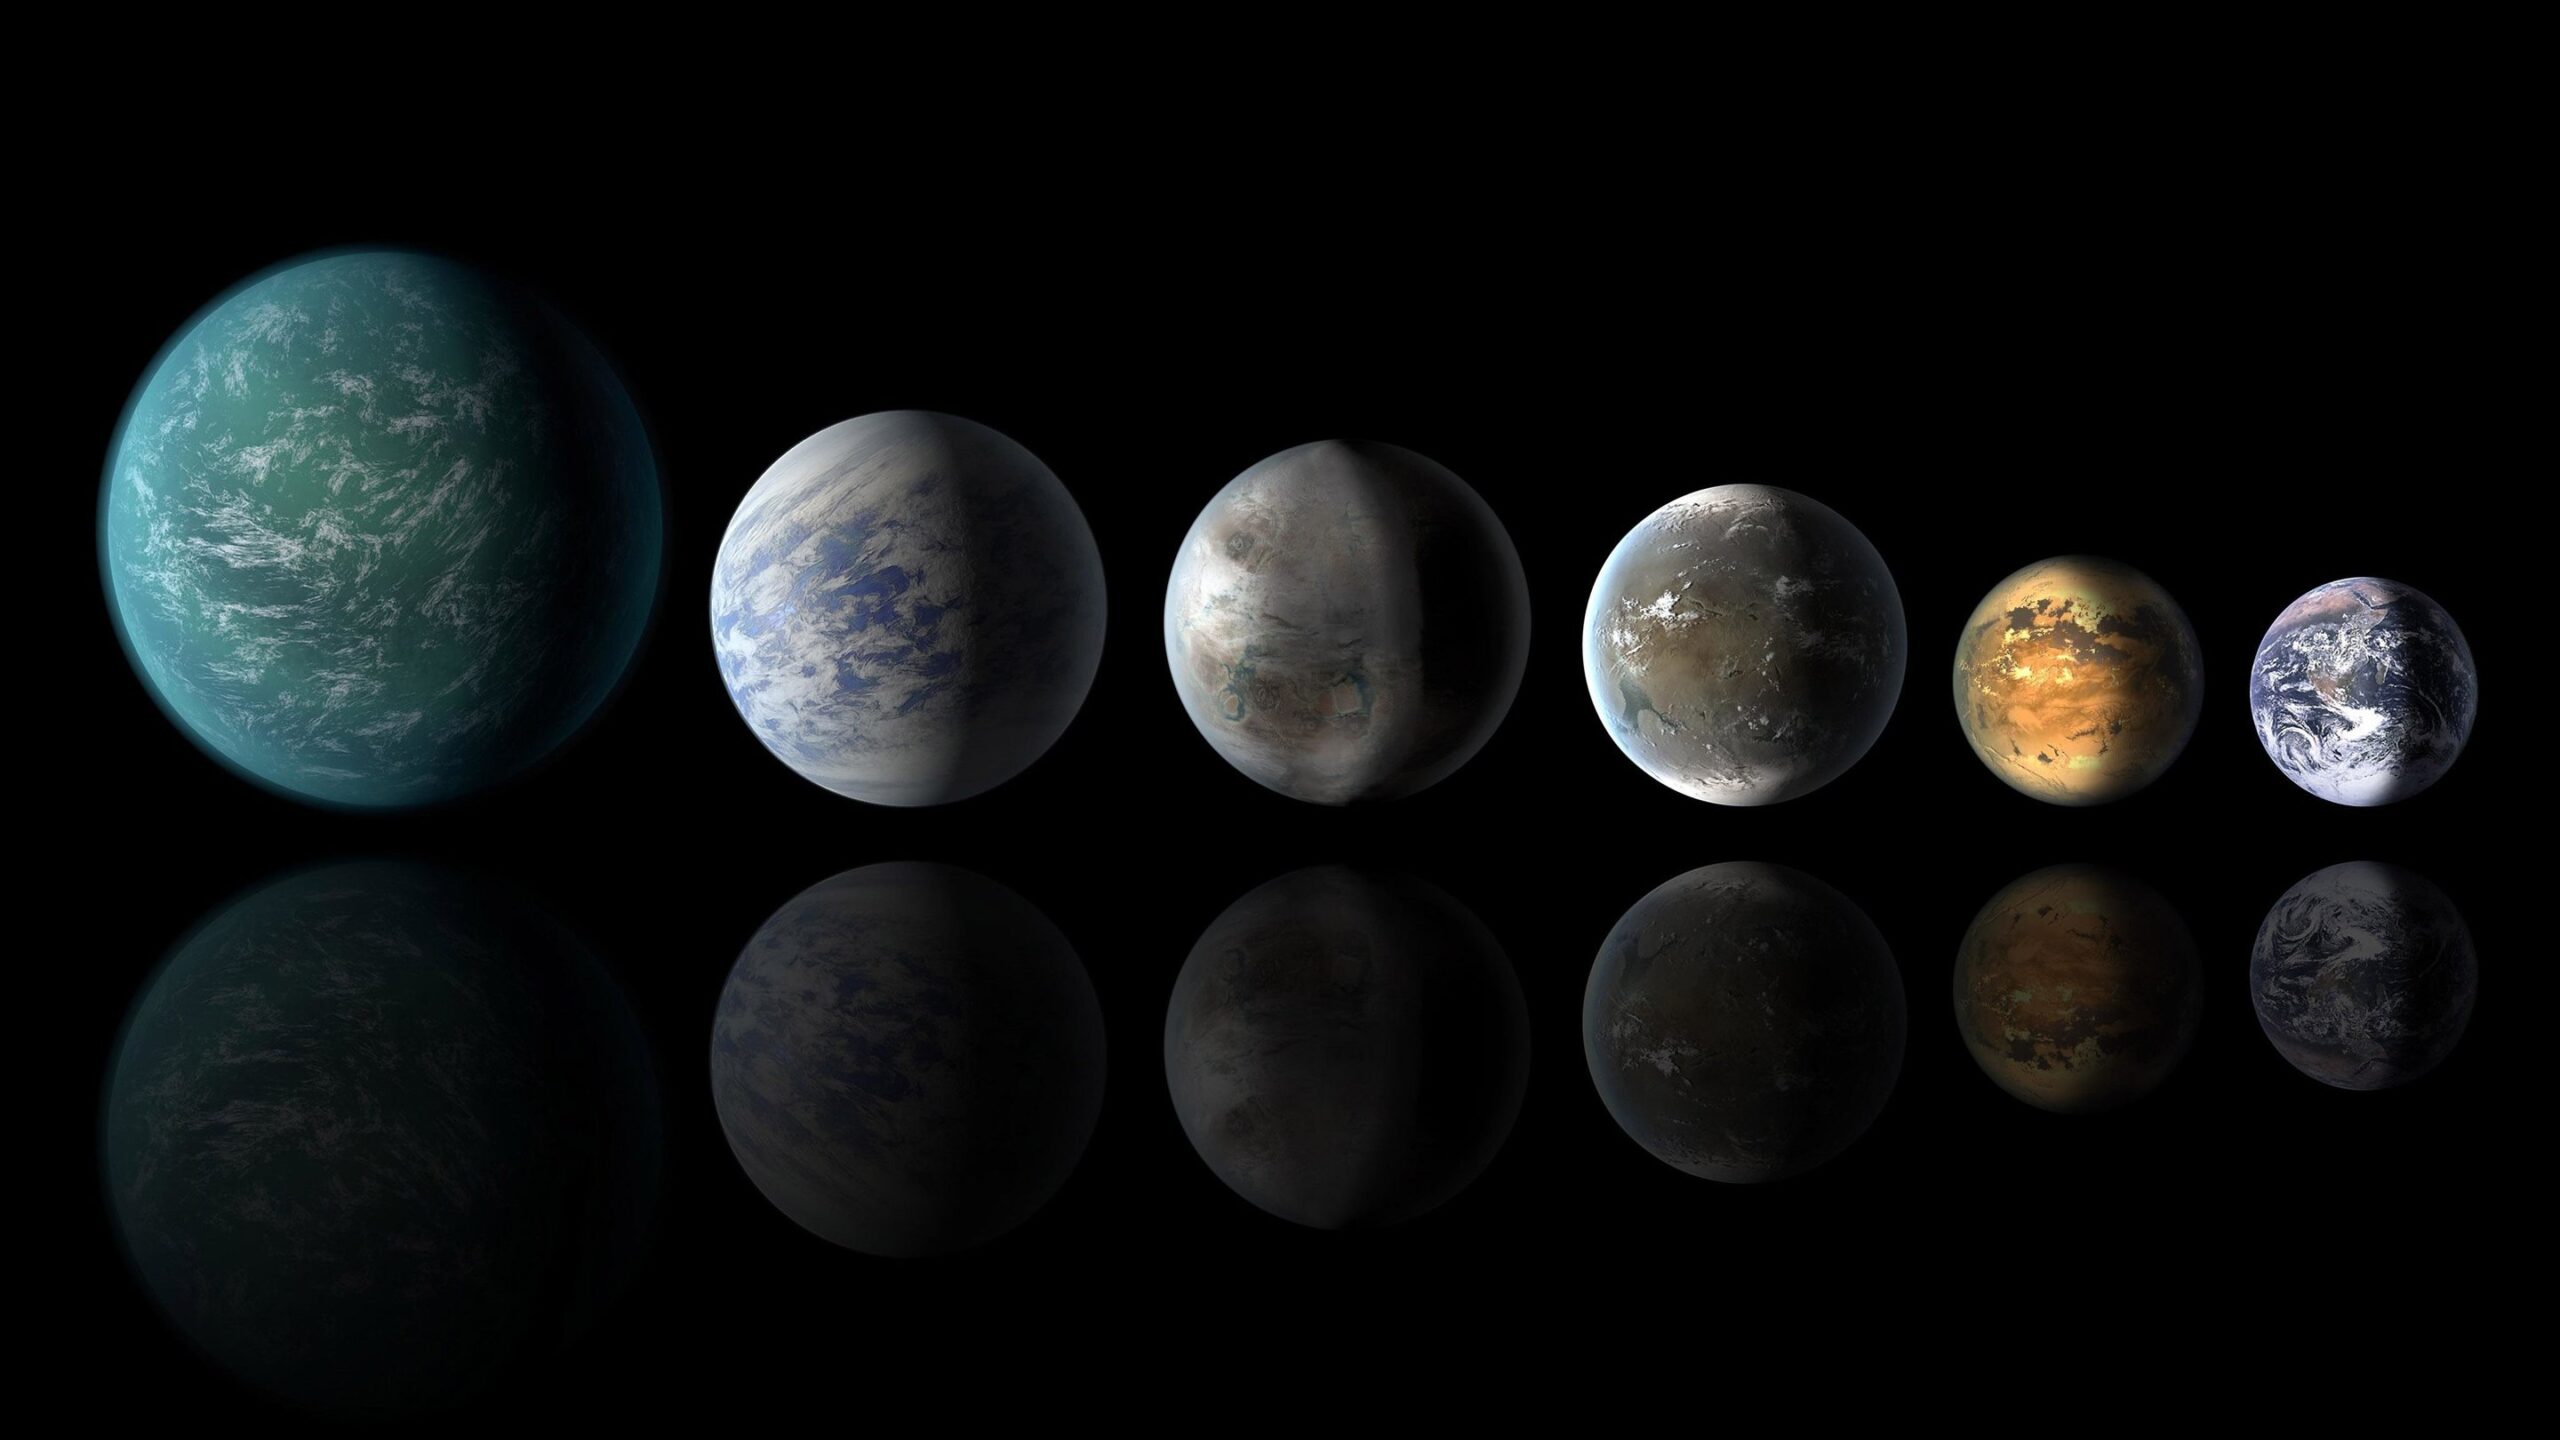 NASA Exoplanet WaterWorlds 20180817 scaled - فرضیه زمین کمیاب چیست و چرا احتمال وجود زندگی فرازمینی را رد می کند؟